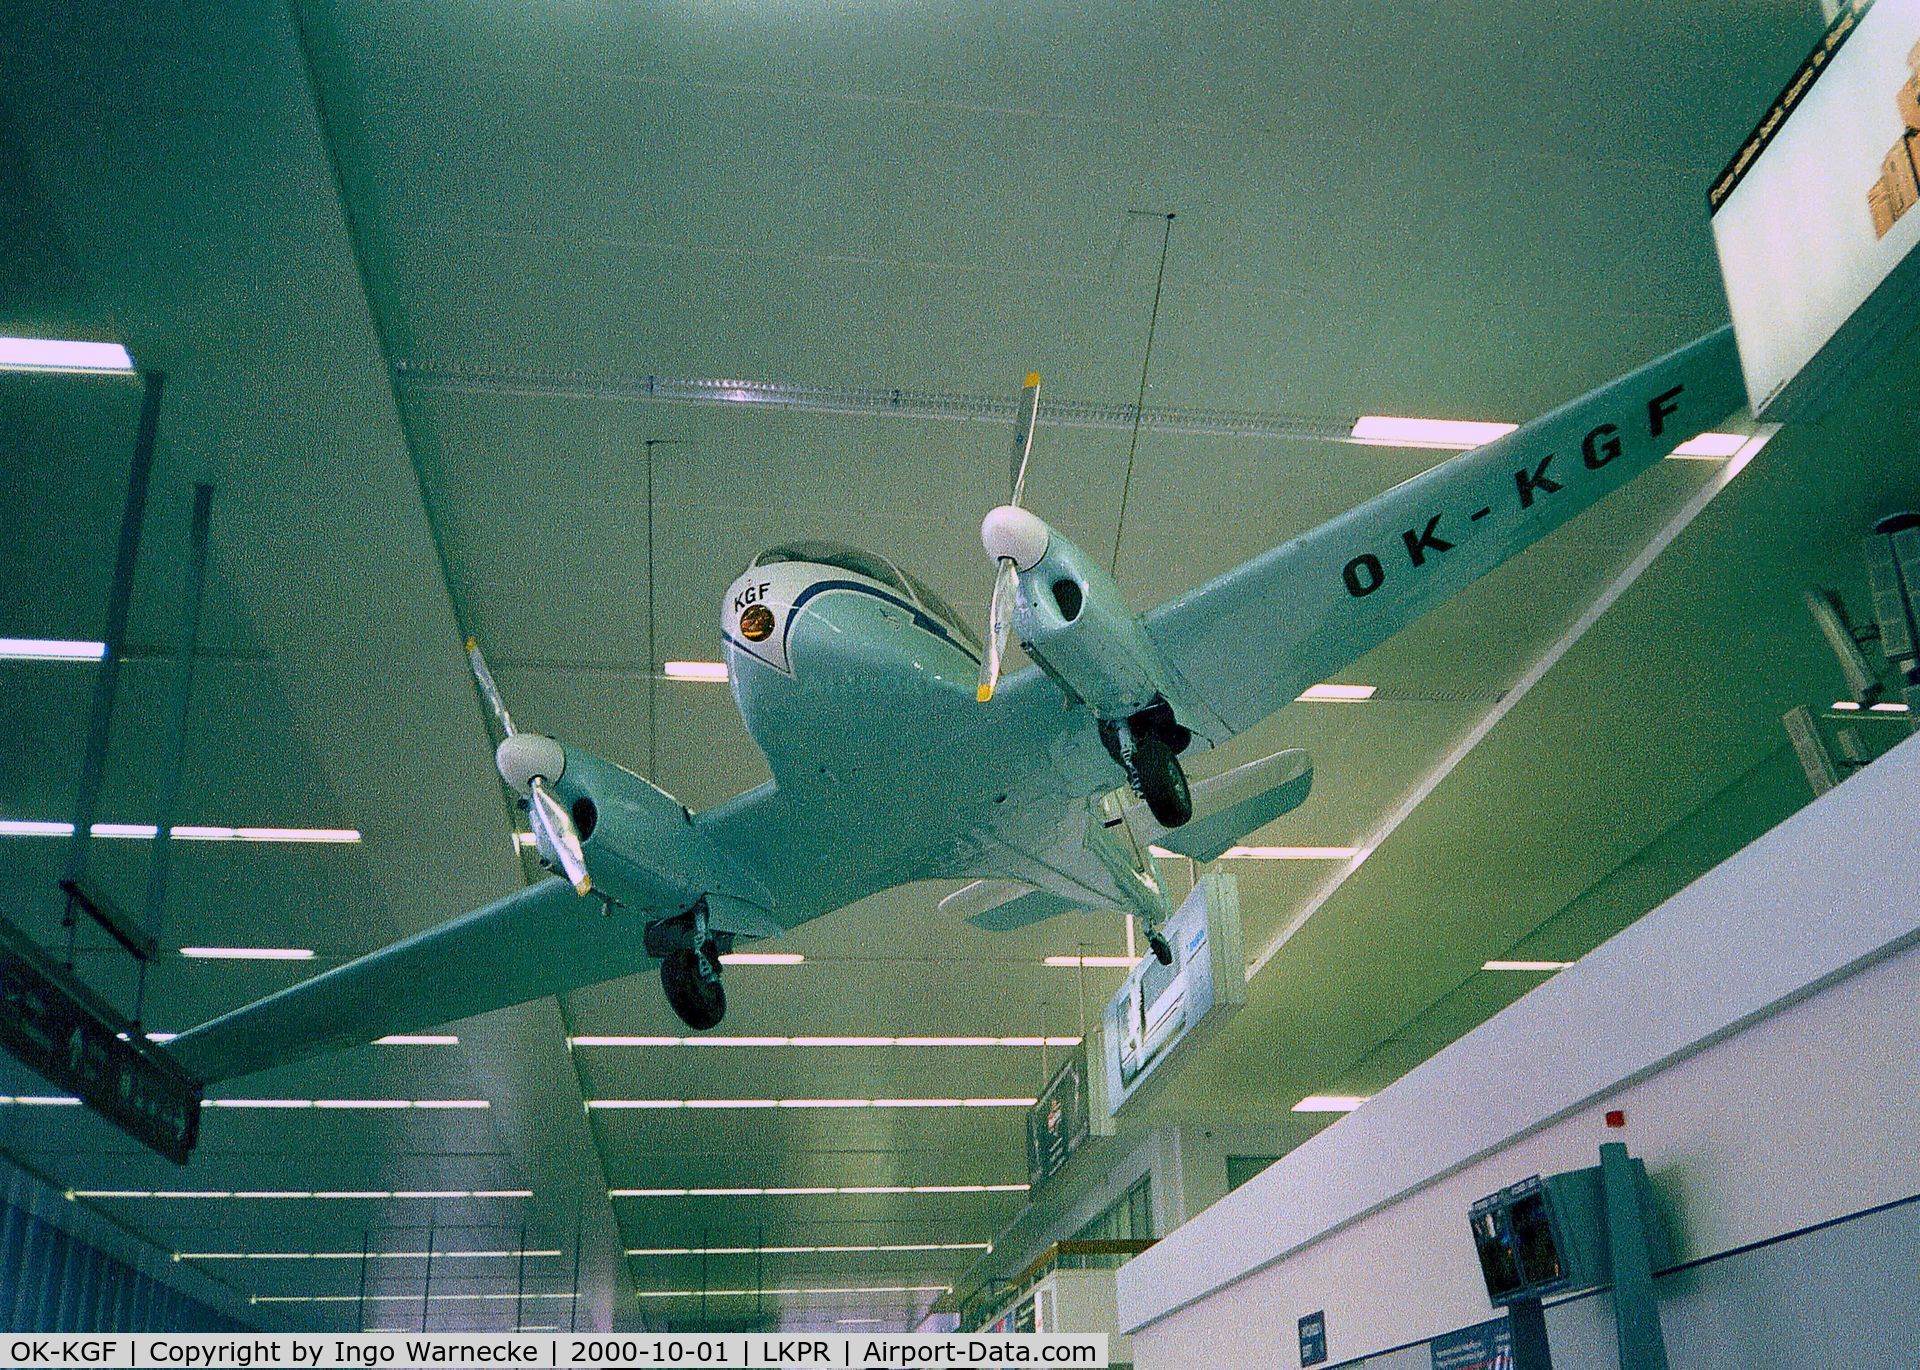 OK-KGF, Aero Super 45 C/N 170419, Aero Super 45 of CSA hanging from the ceiling of the terminal in Prague-Ruzyne airport